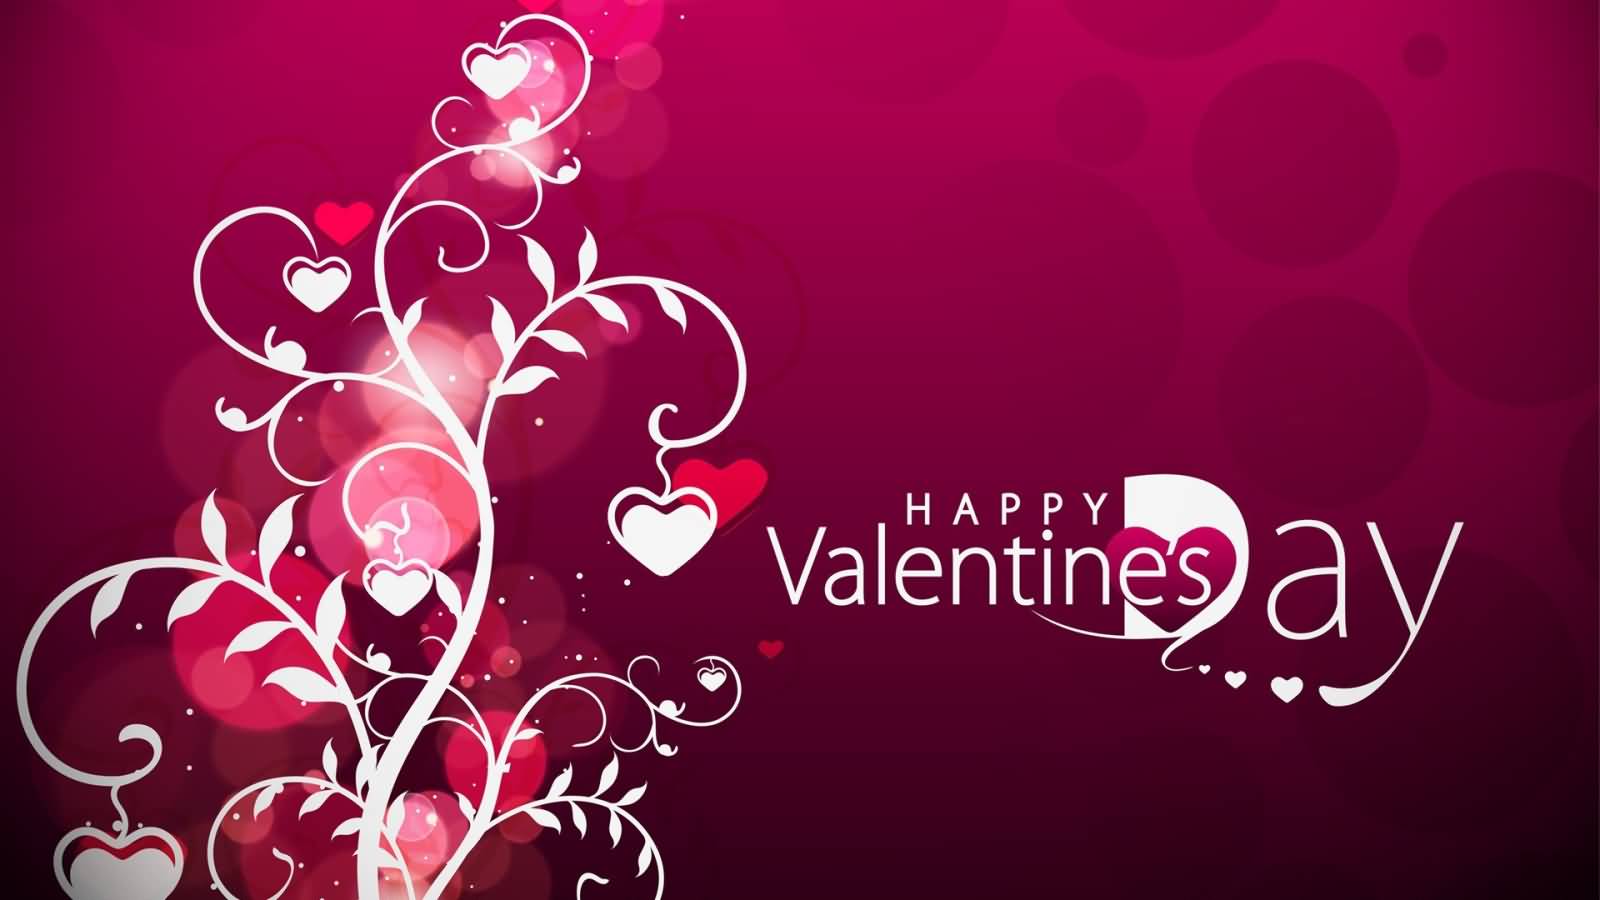 Happy Valentine’s Day Greetings